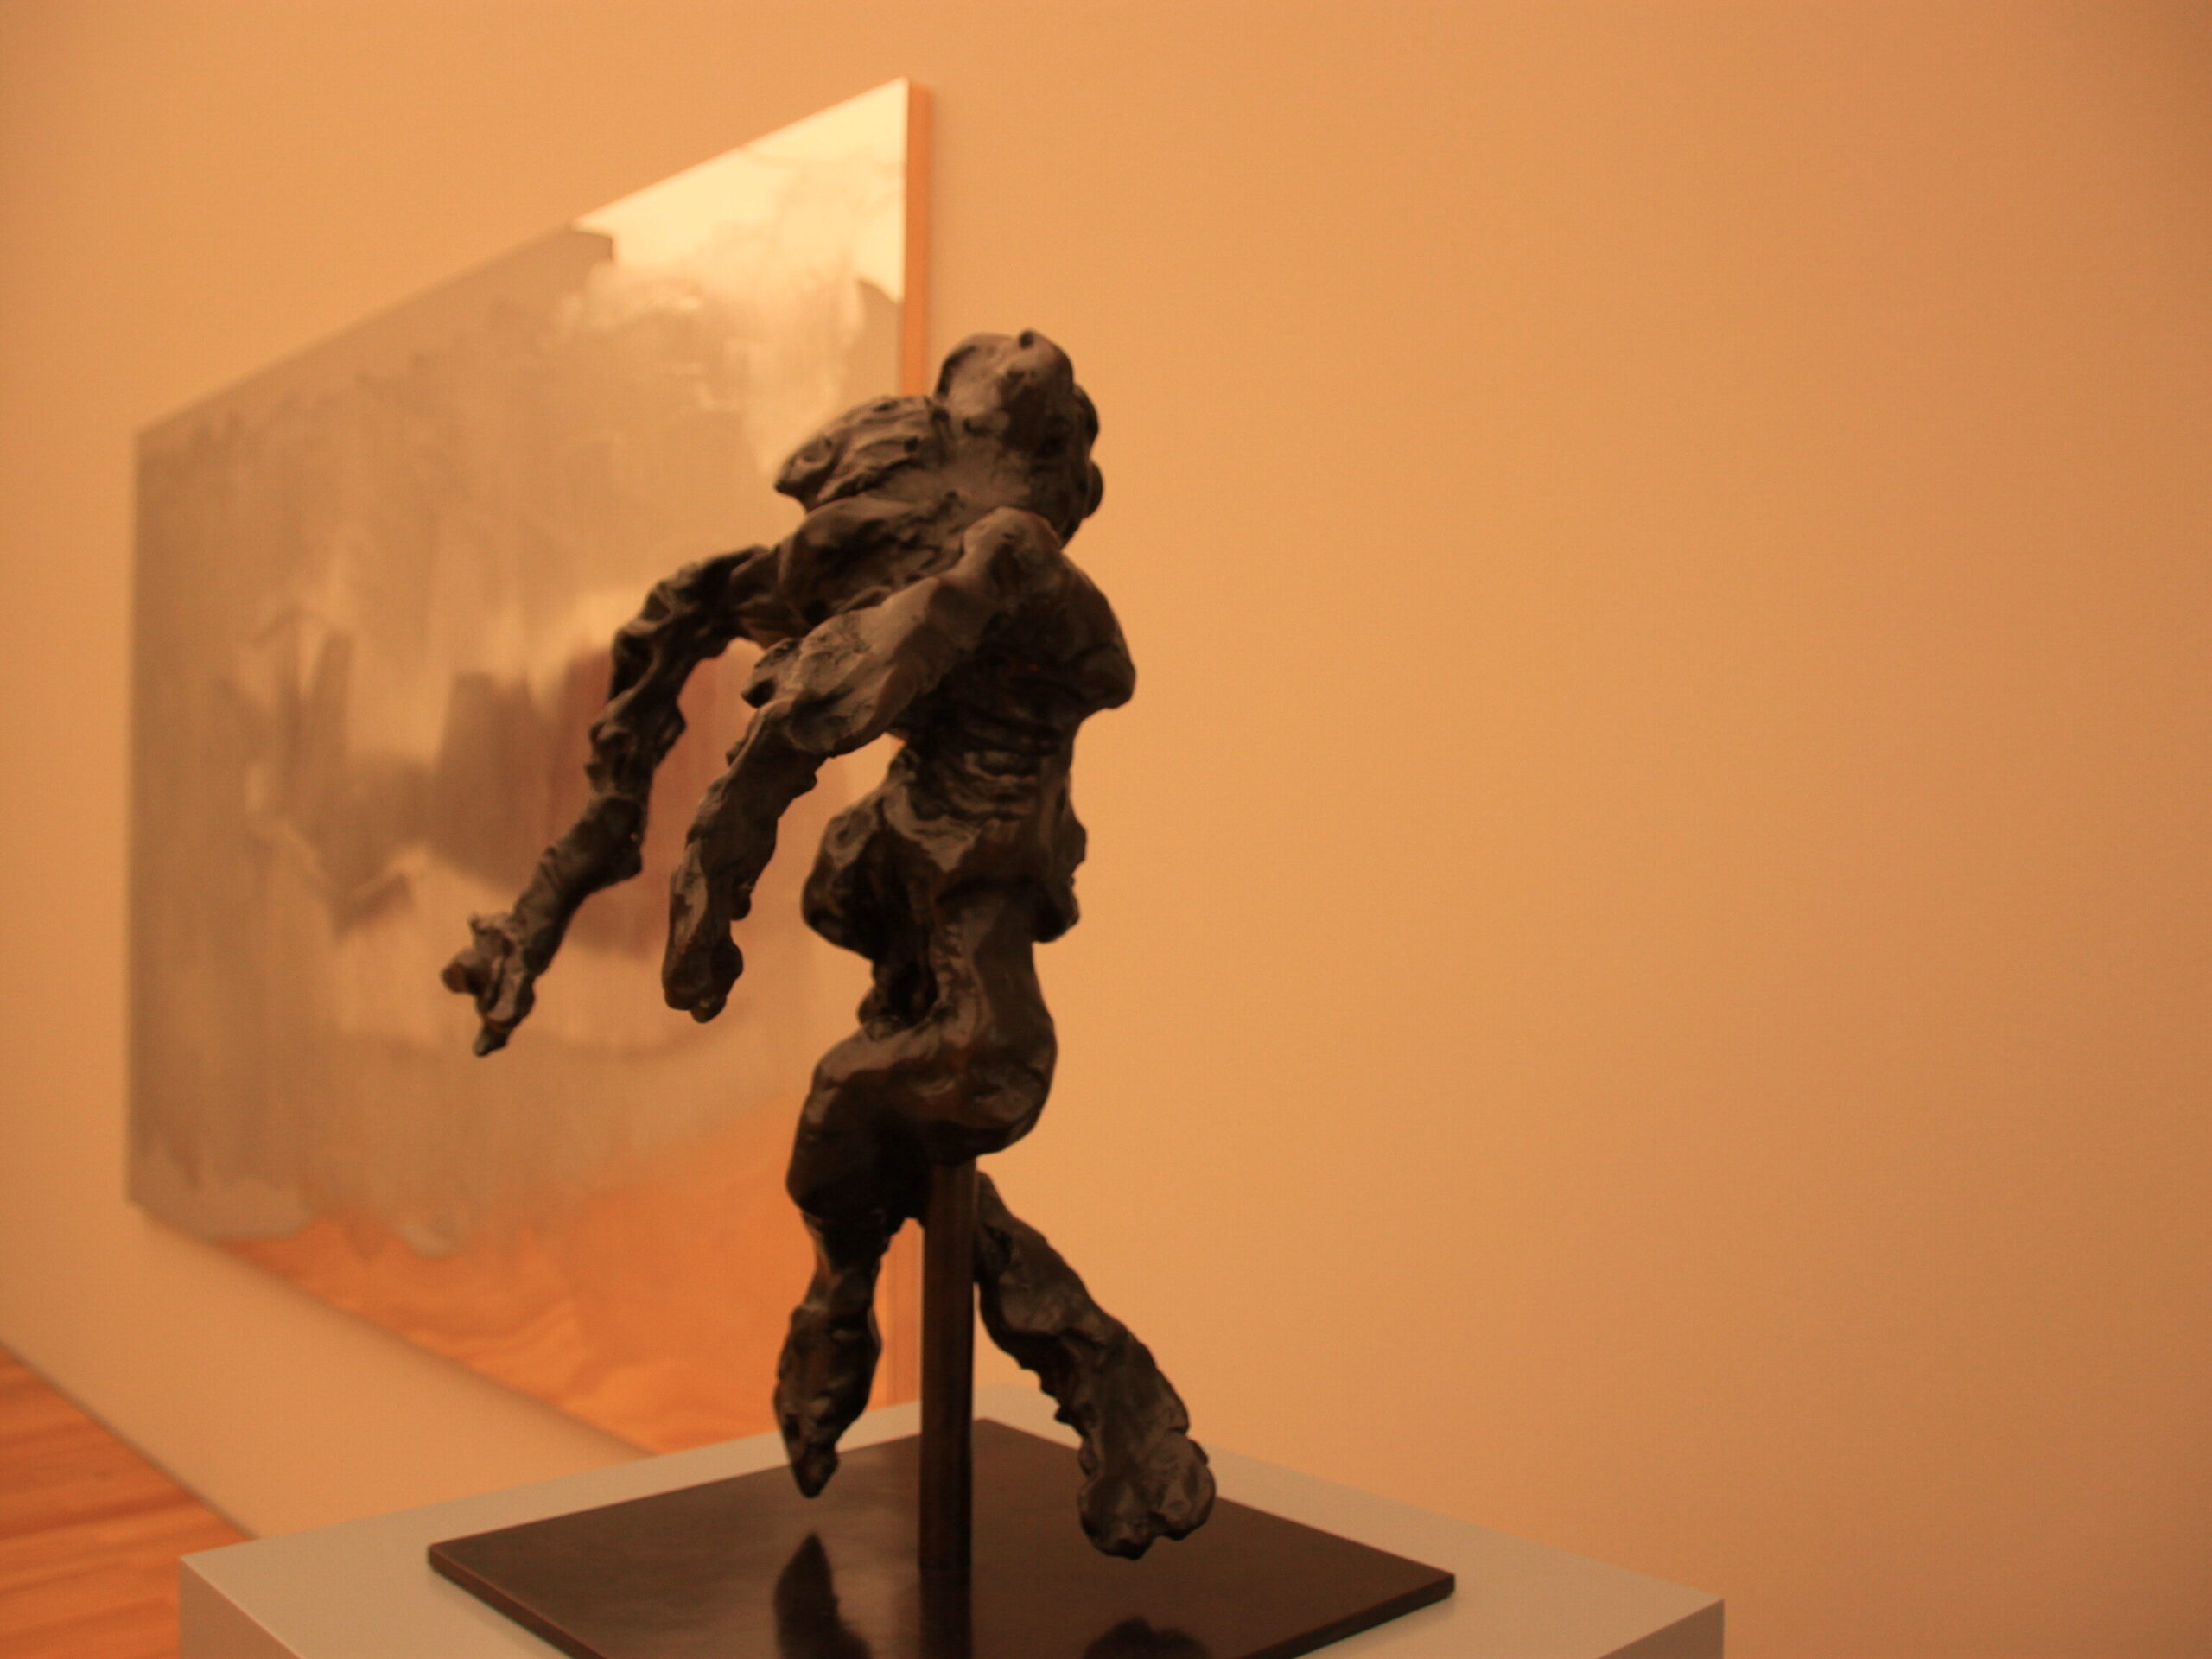 Willem de Kooning, skulptur, hilti art foundation Liechtenstein